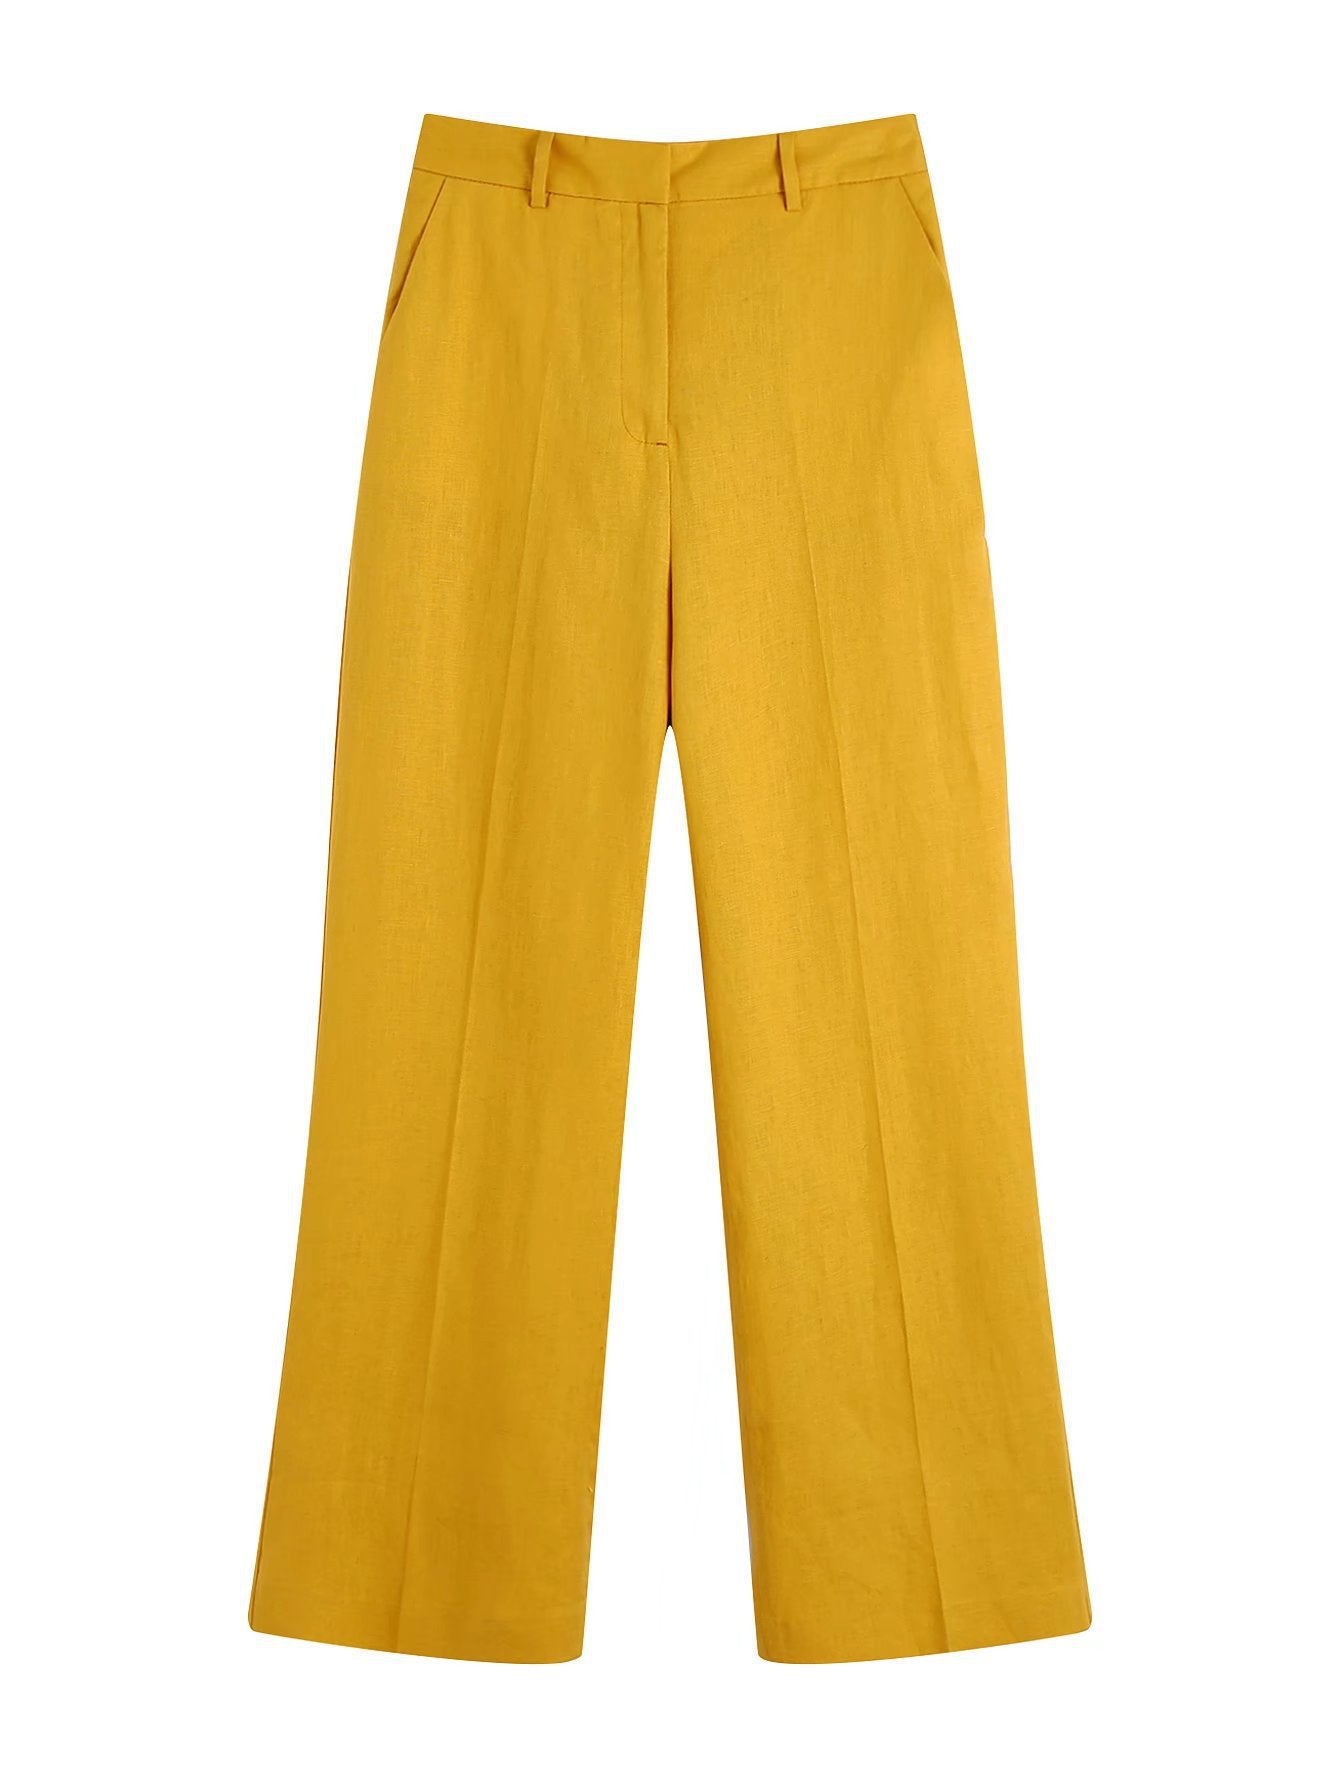 Summer Retro High Waist Slimming Yellow Trousers Straight Pants Women